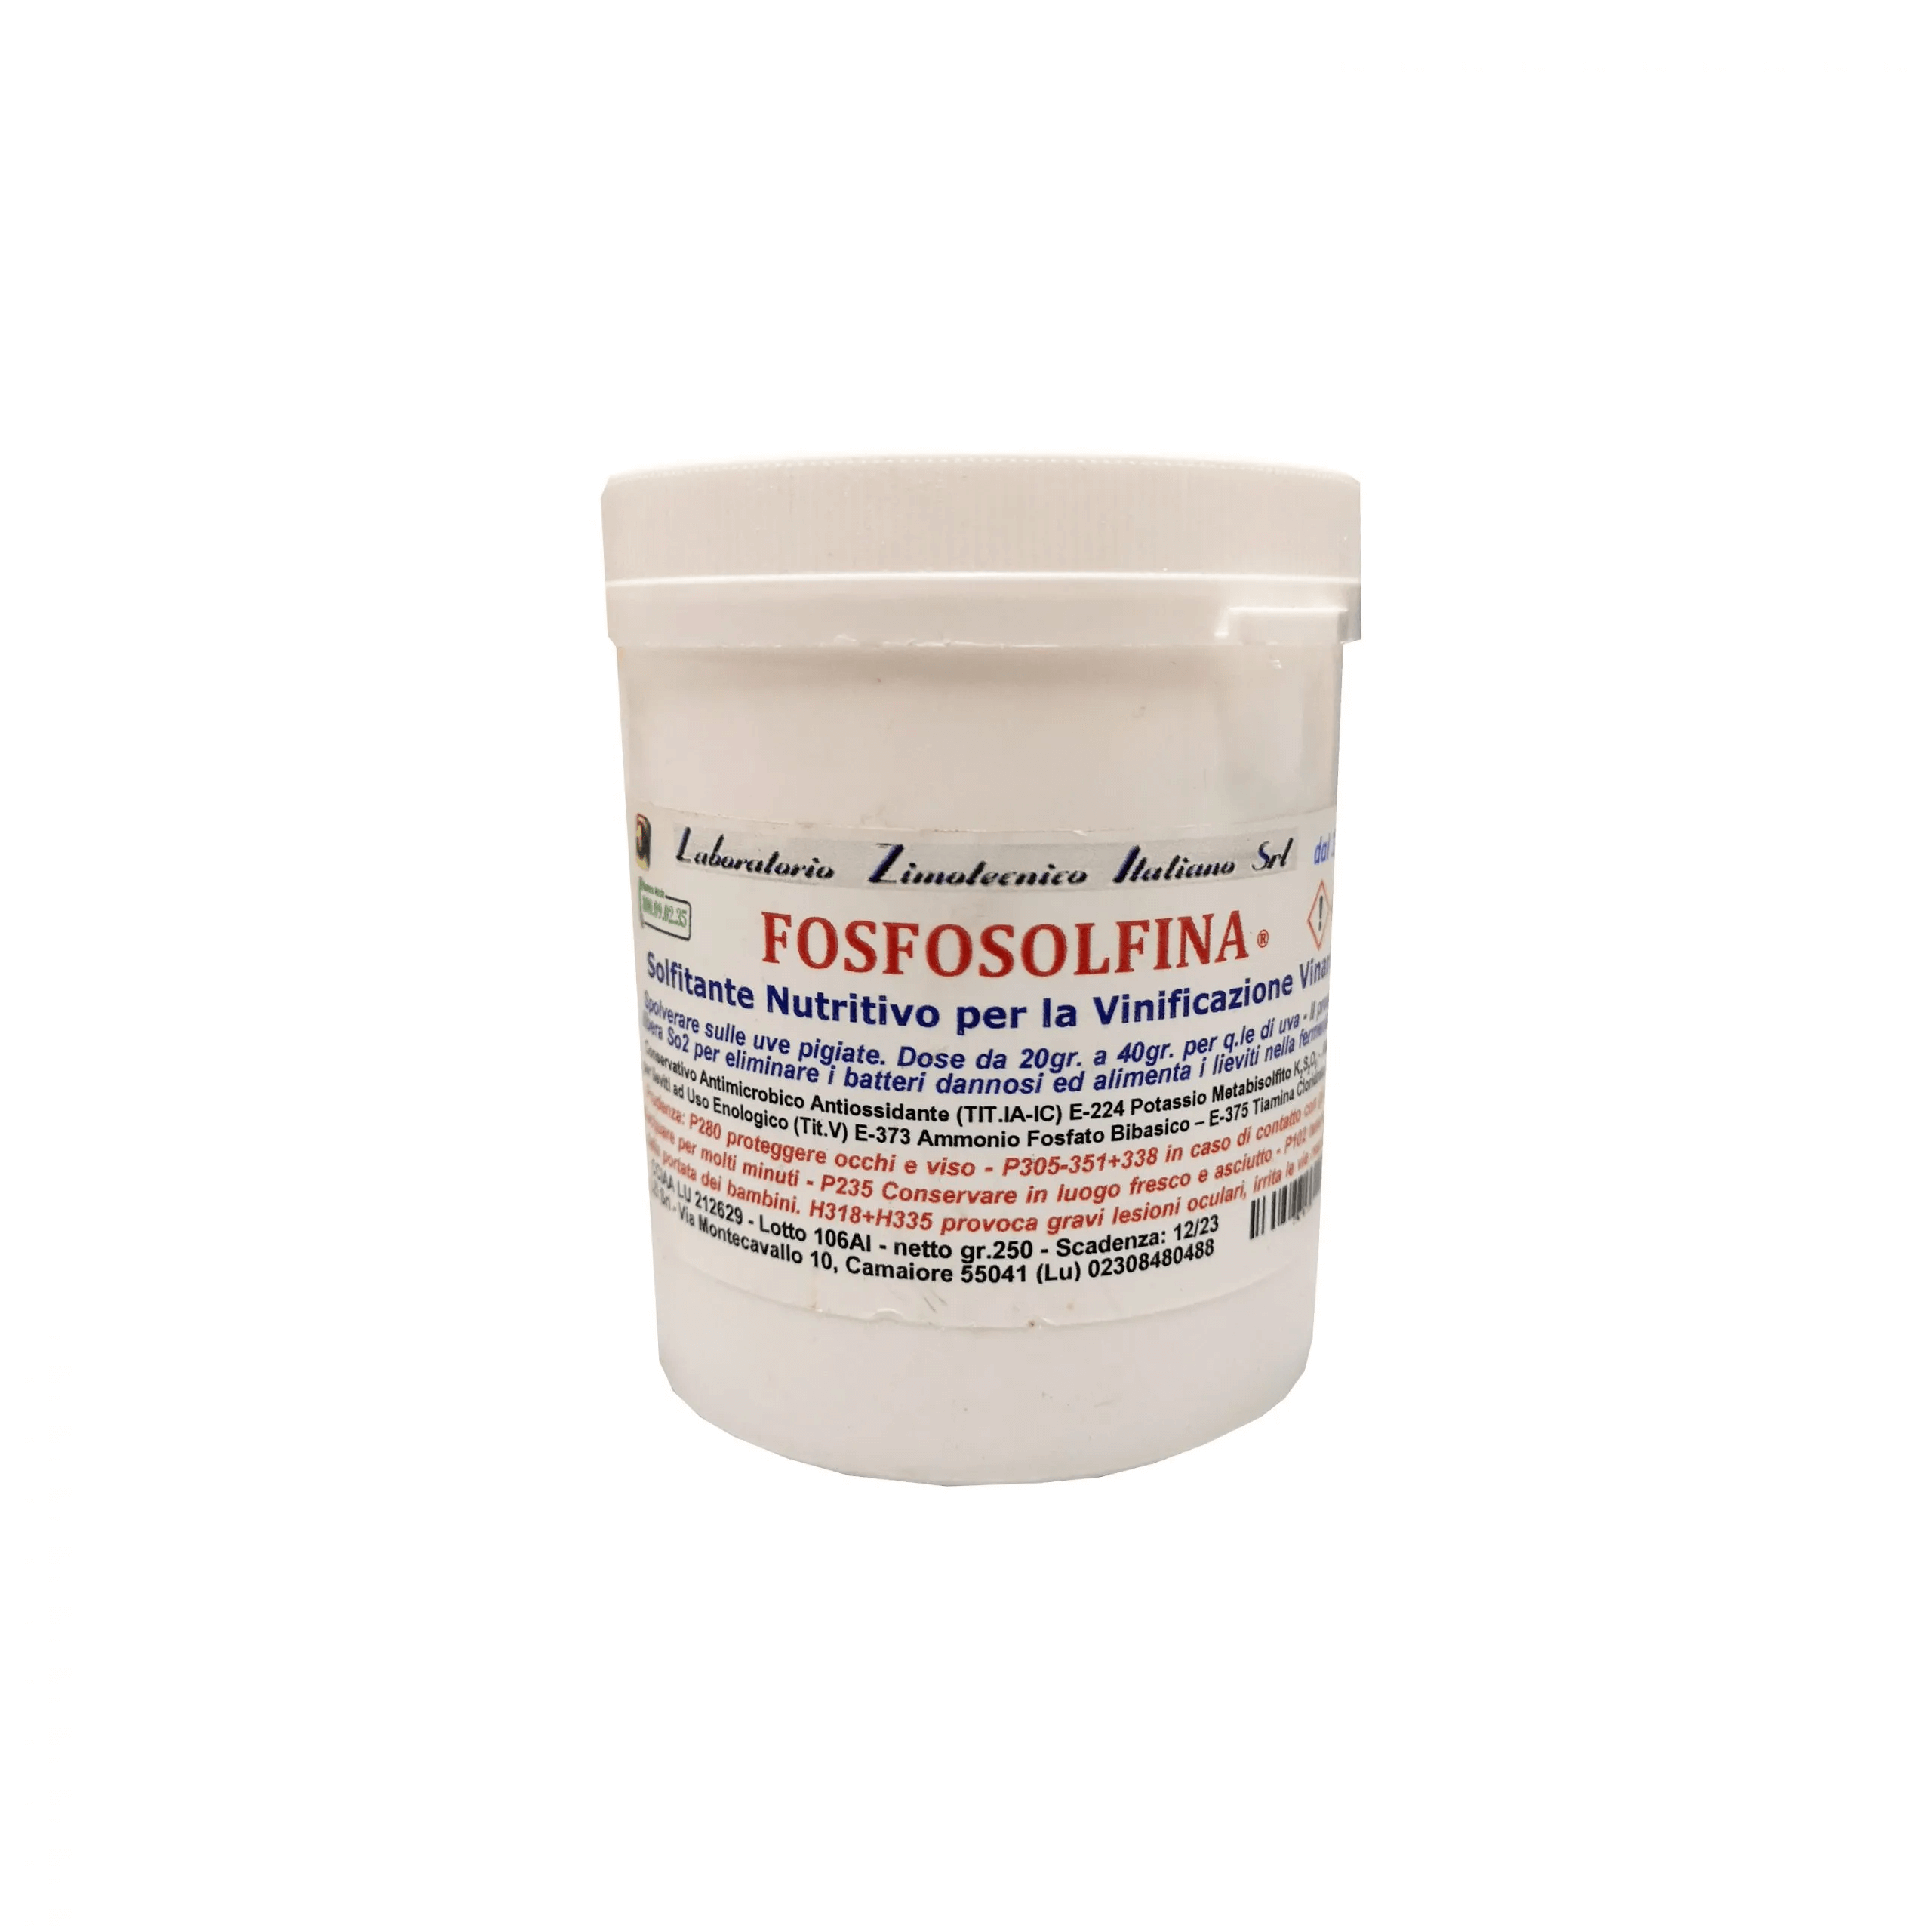 Fosfosolfina solfitante nutritivo per la vinificazione – 250 gr